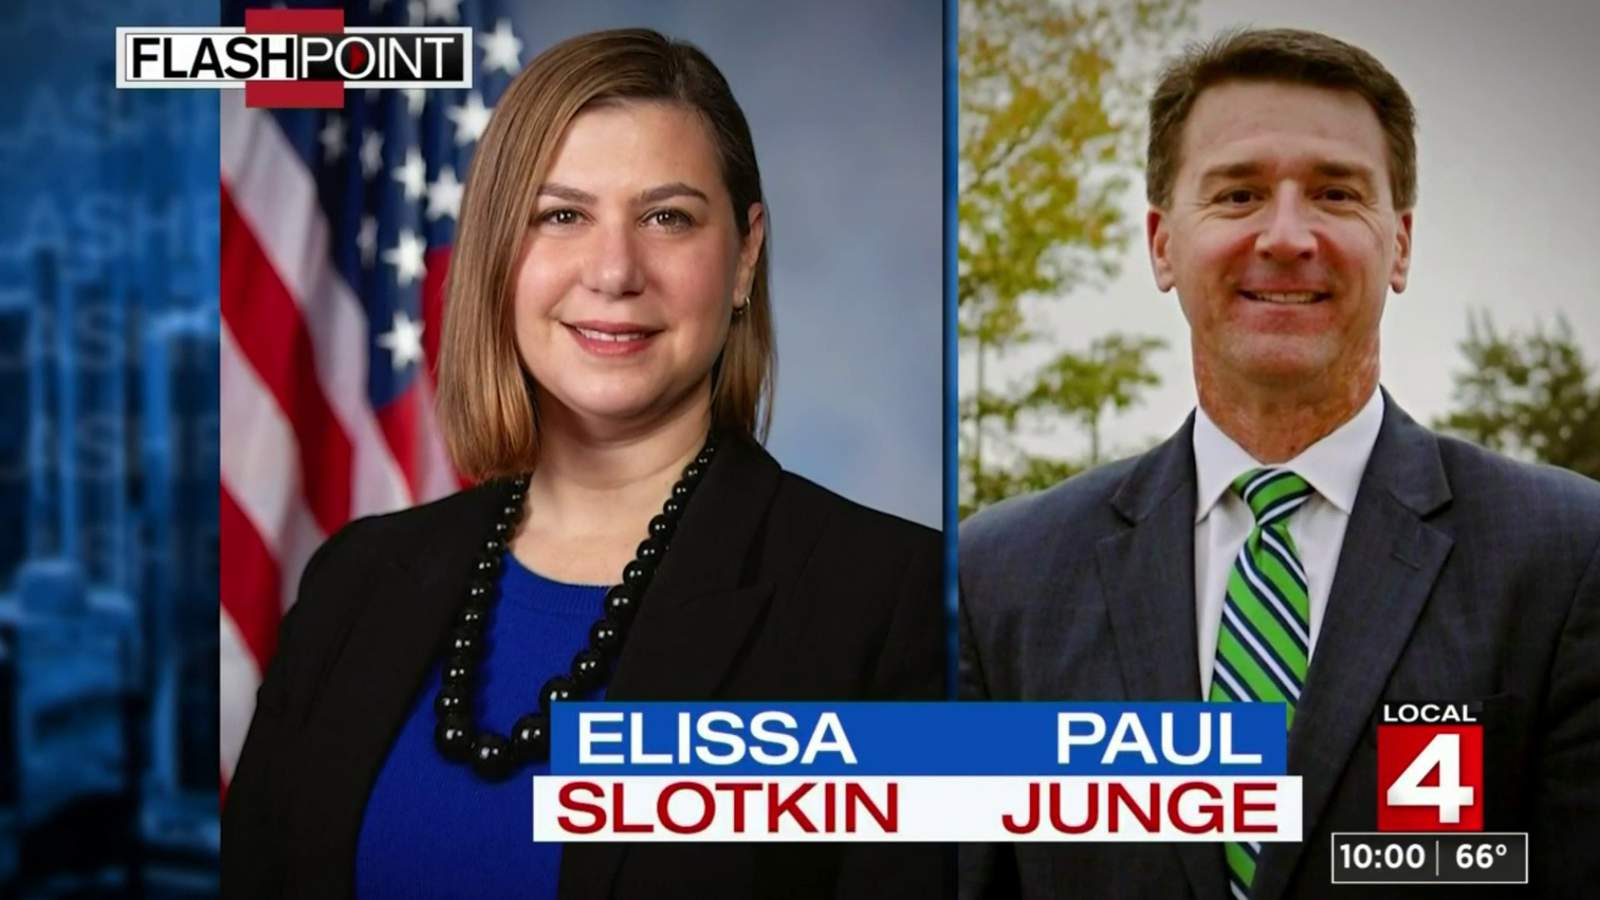 Watch: Michigan's 8th Congressional District candidates Slotkin, Junge debate